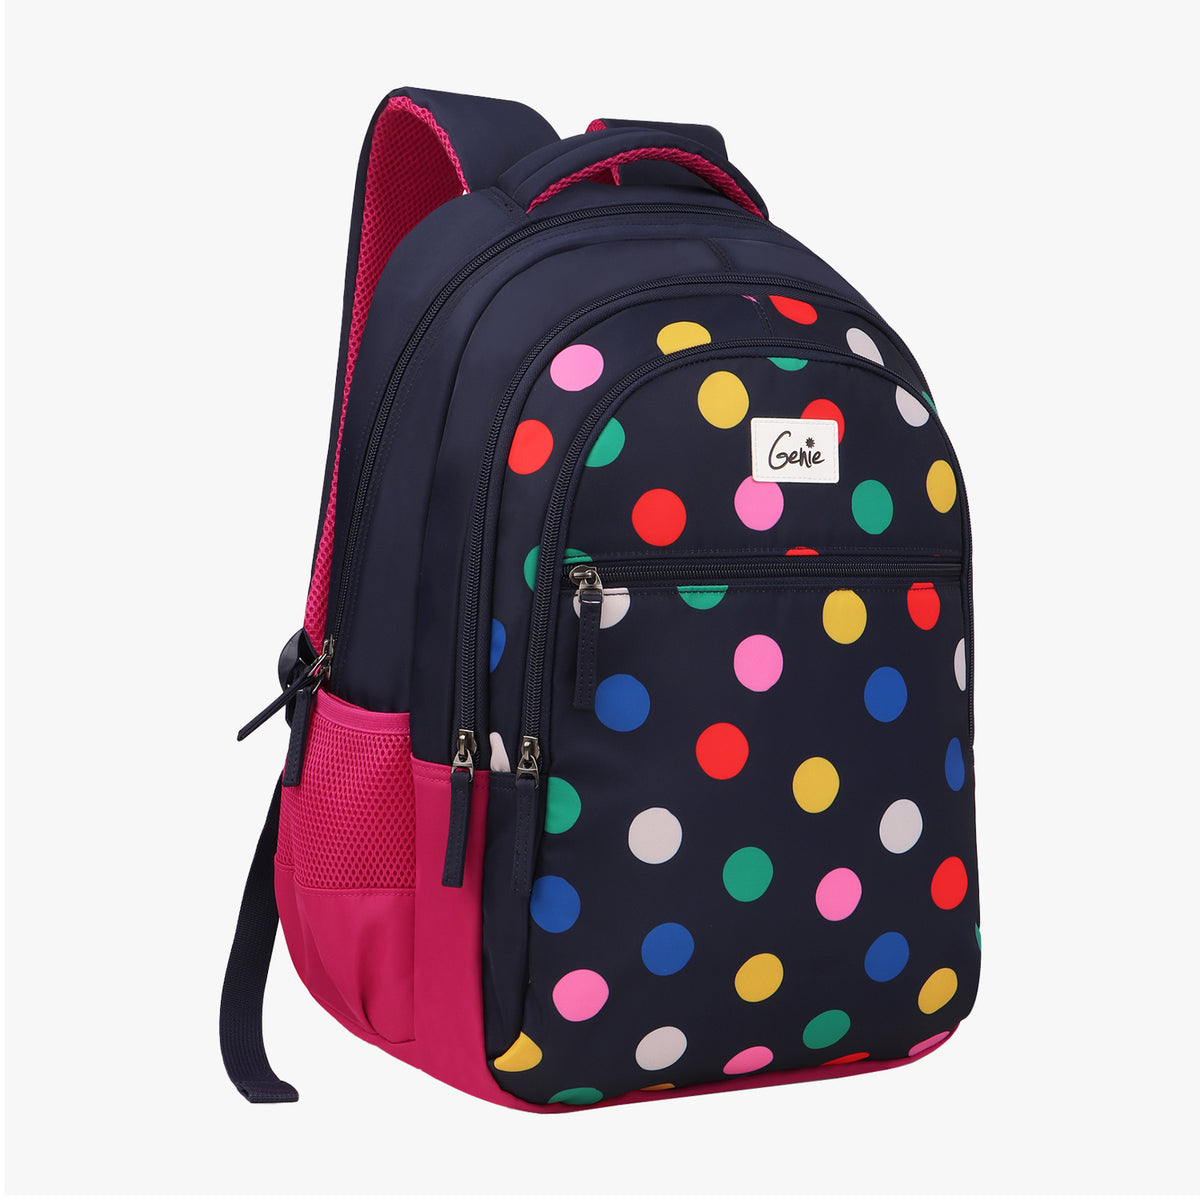 Poppins School Backpack - Navy Blue